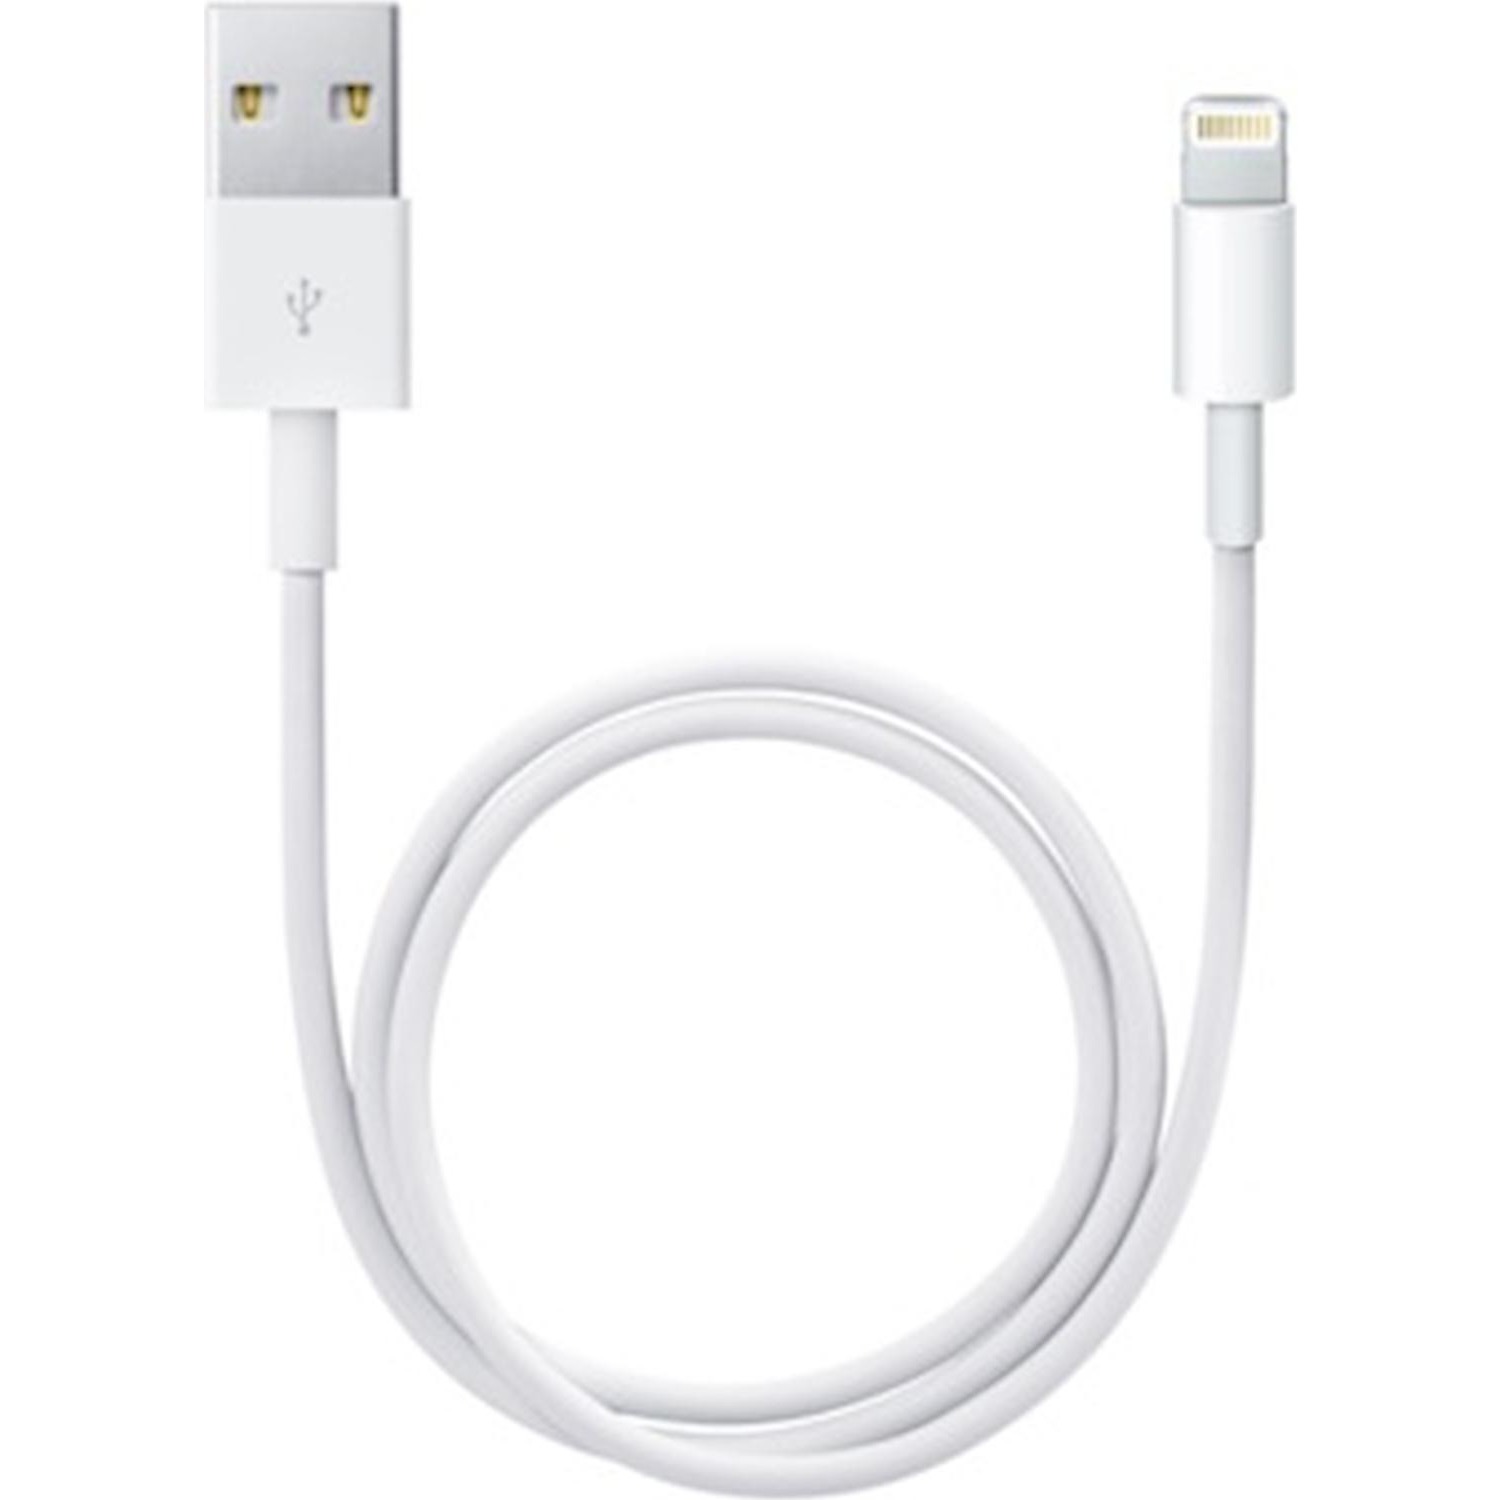 Immagine per Cavo Apple lightning a USB 0,5 metri iPhone iPad da DIMOStore